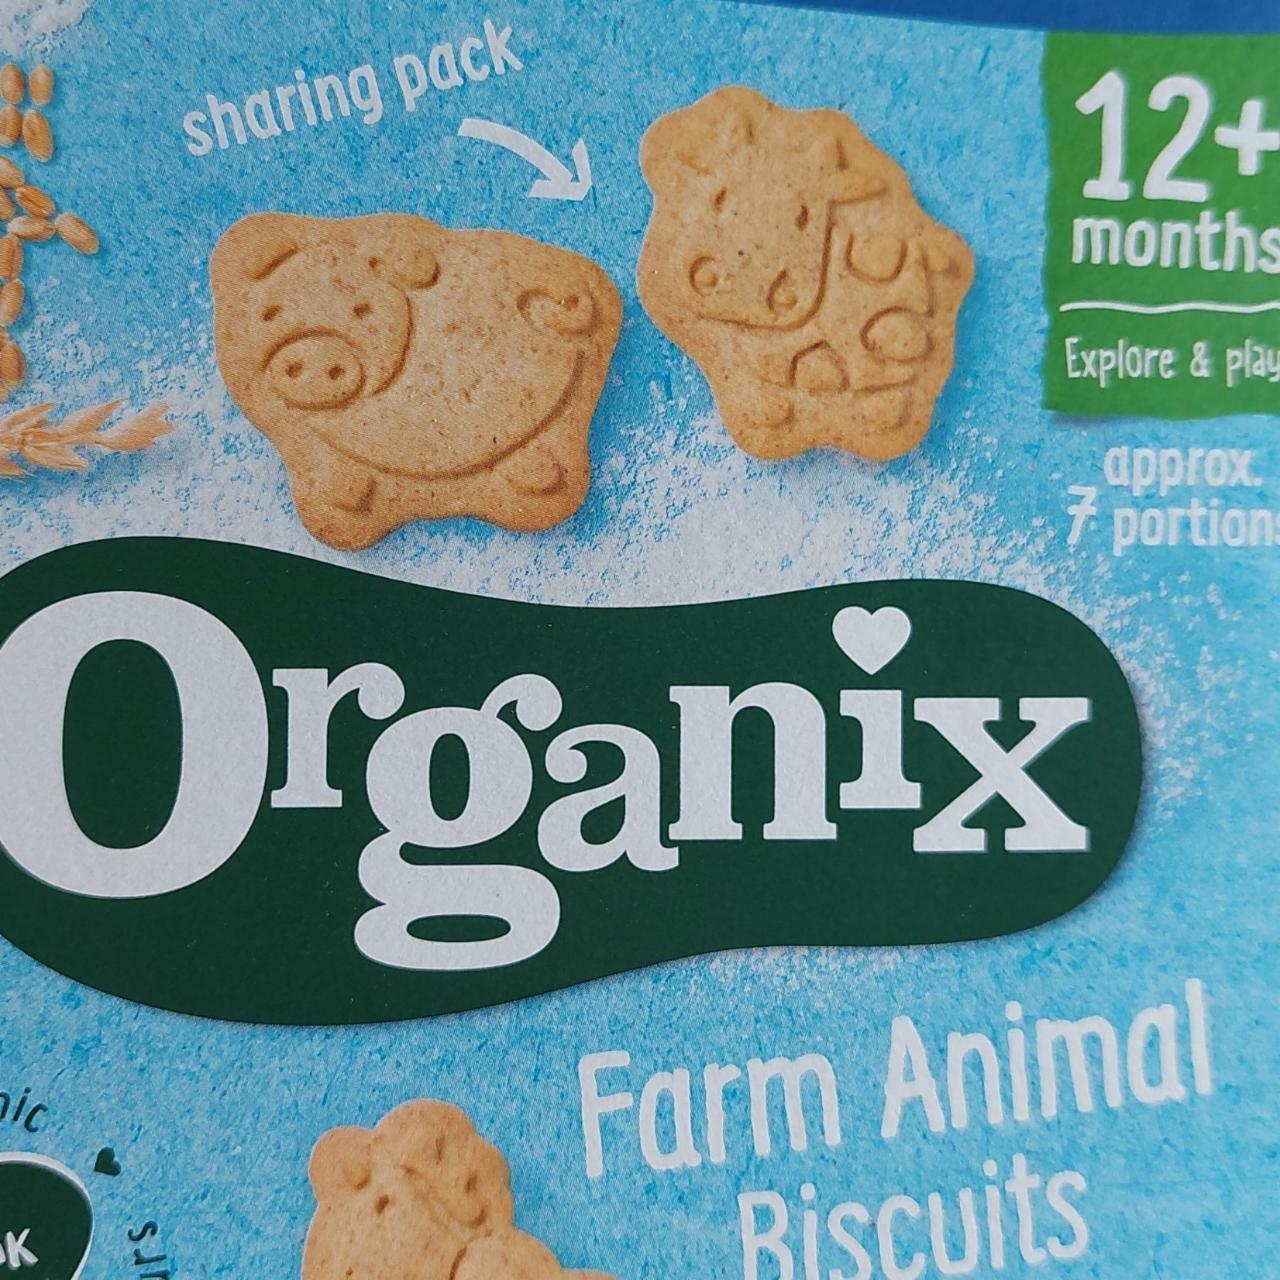 Képek - Farm animals biscuits Organix